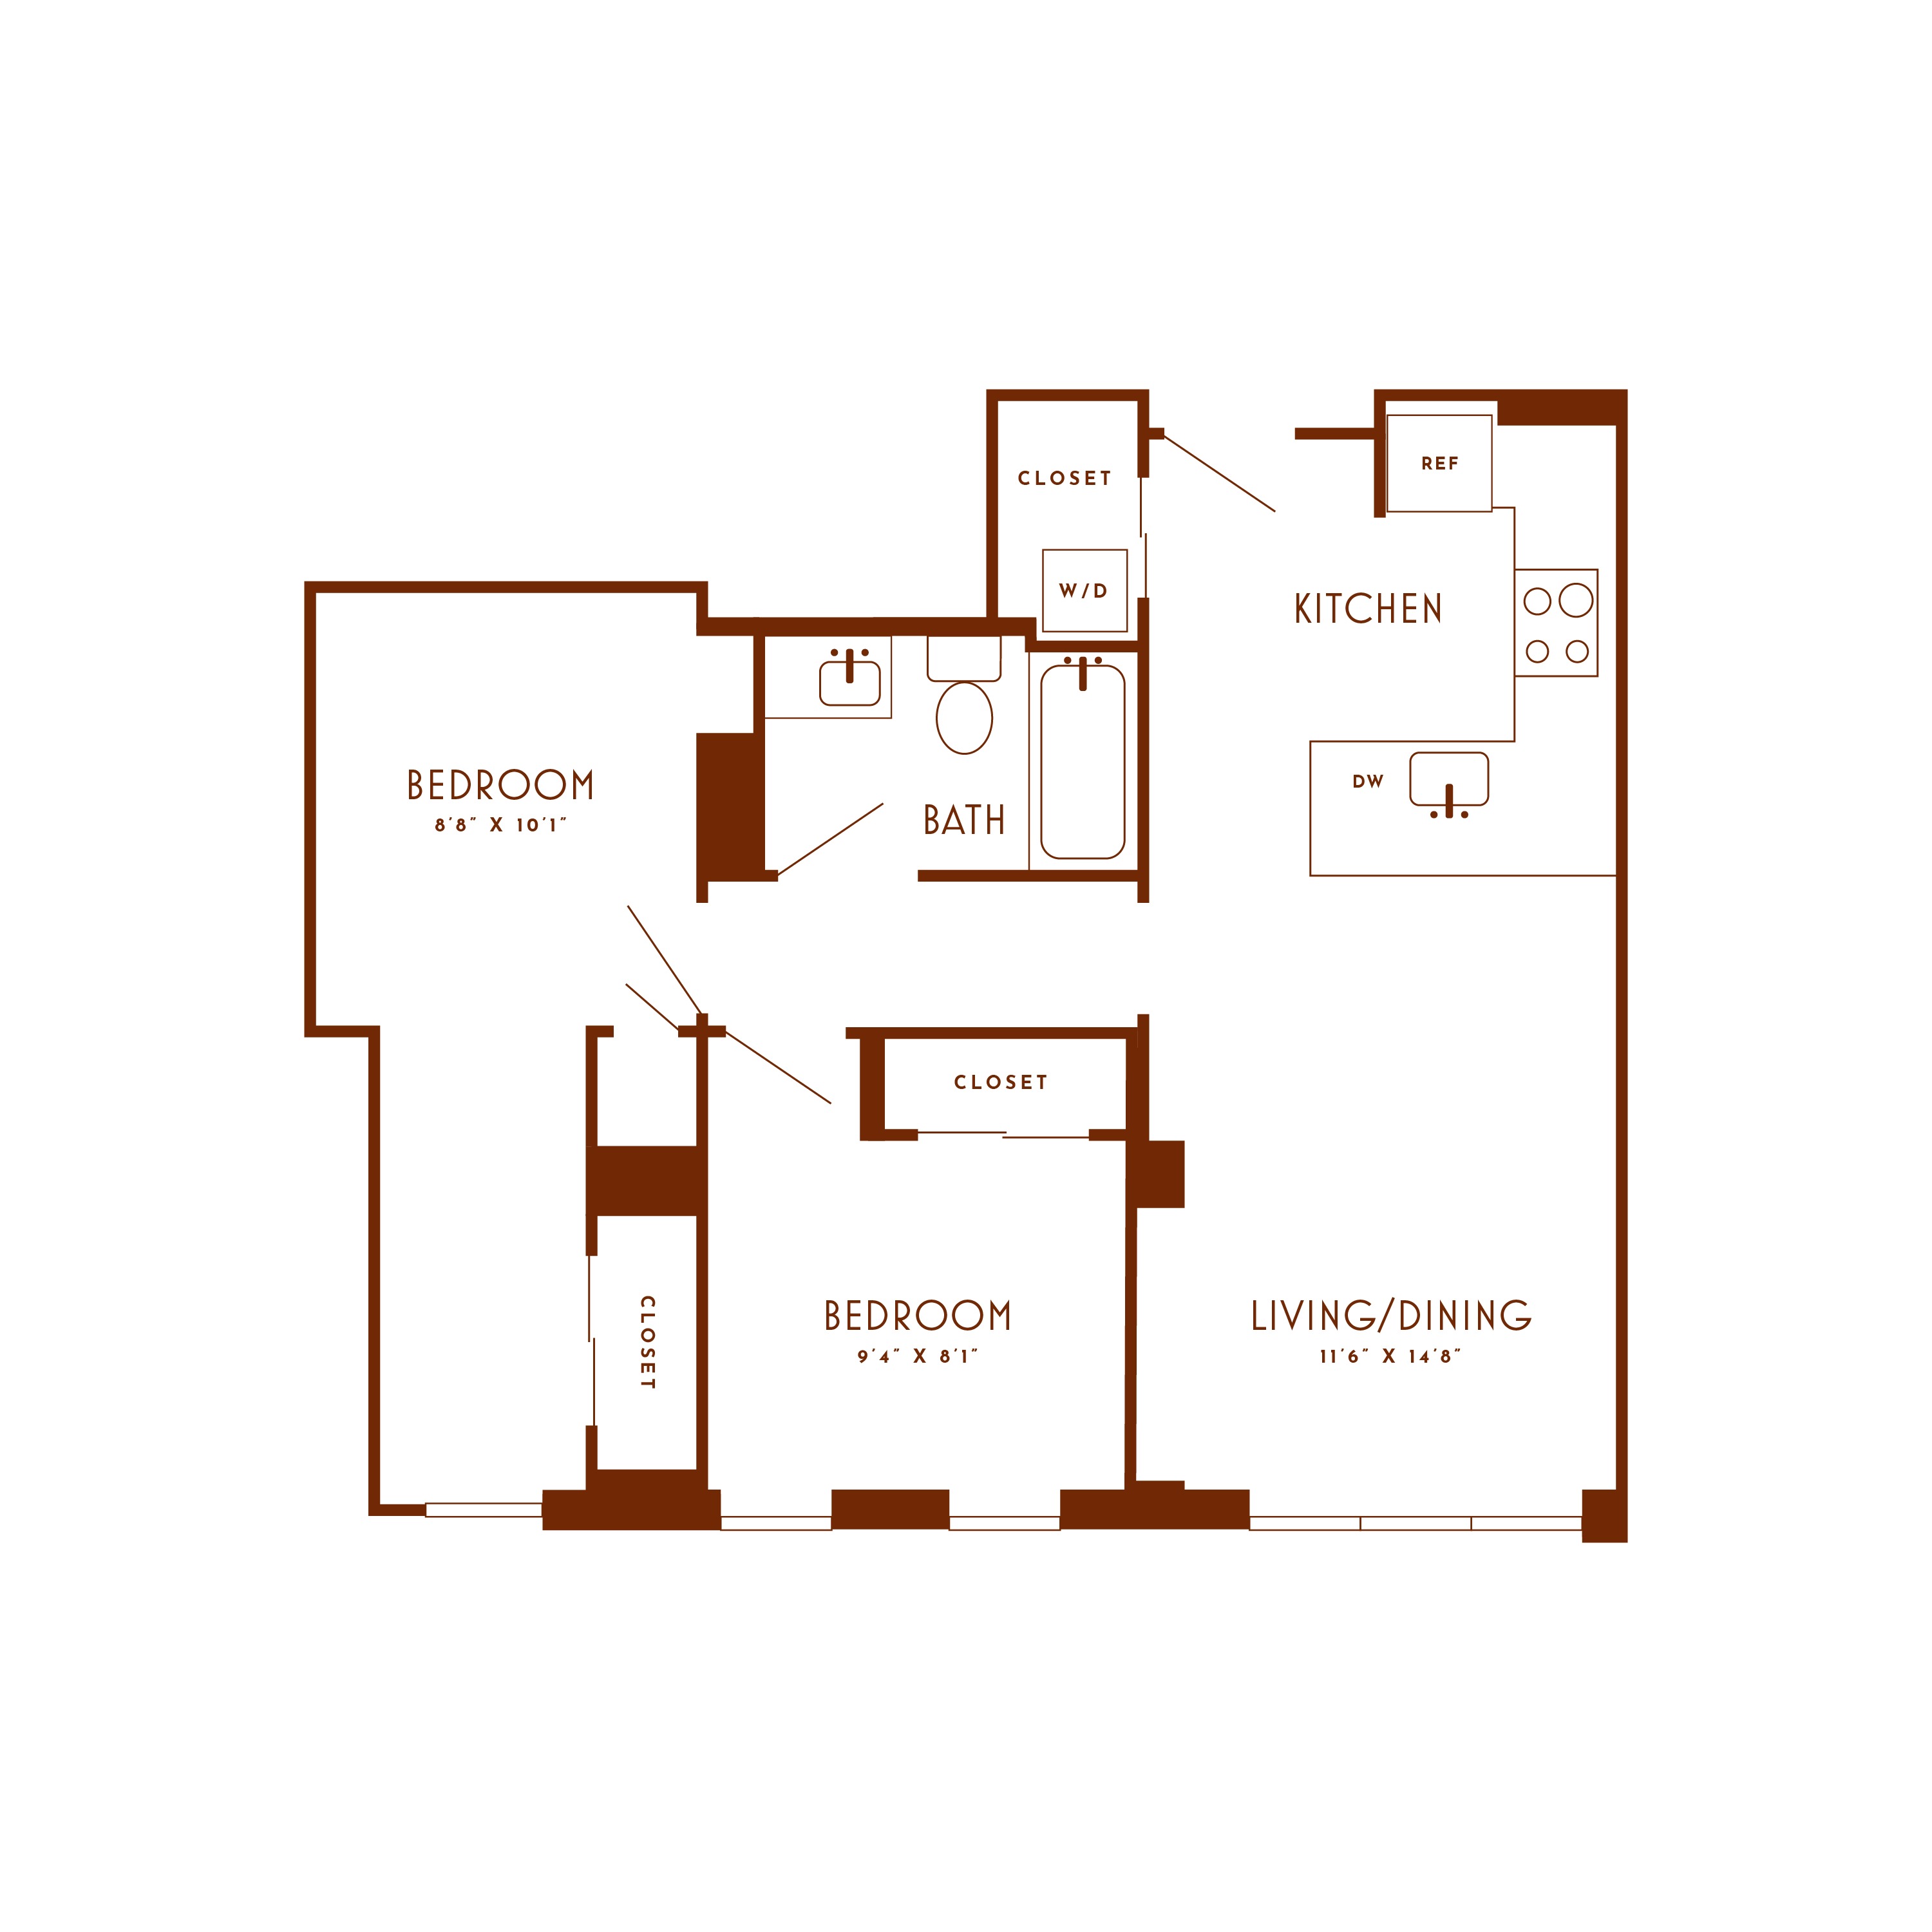 Floor plan image of unit 116